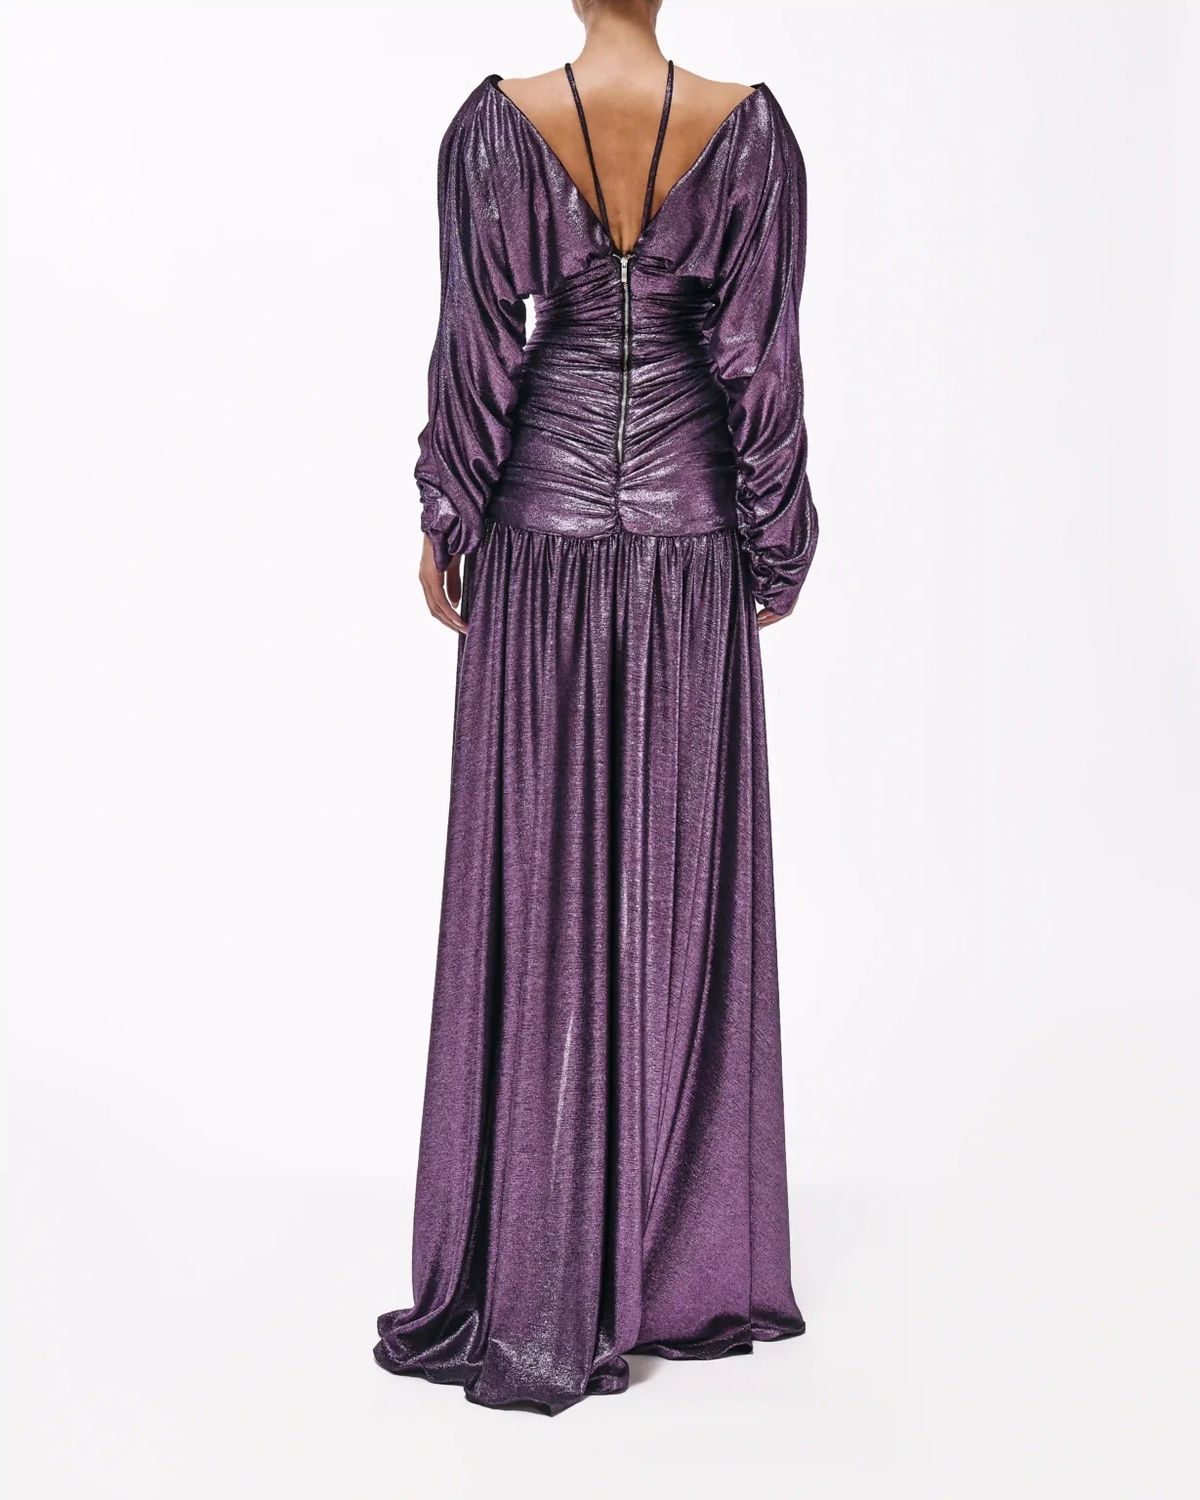 Style metallic-majesty-24-17 Valdrin Sahiti Size M Pageant Purple Side Slit Dress on Queenly